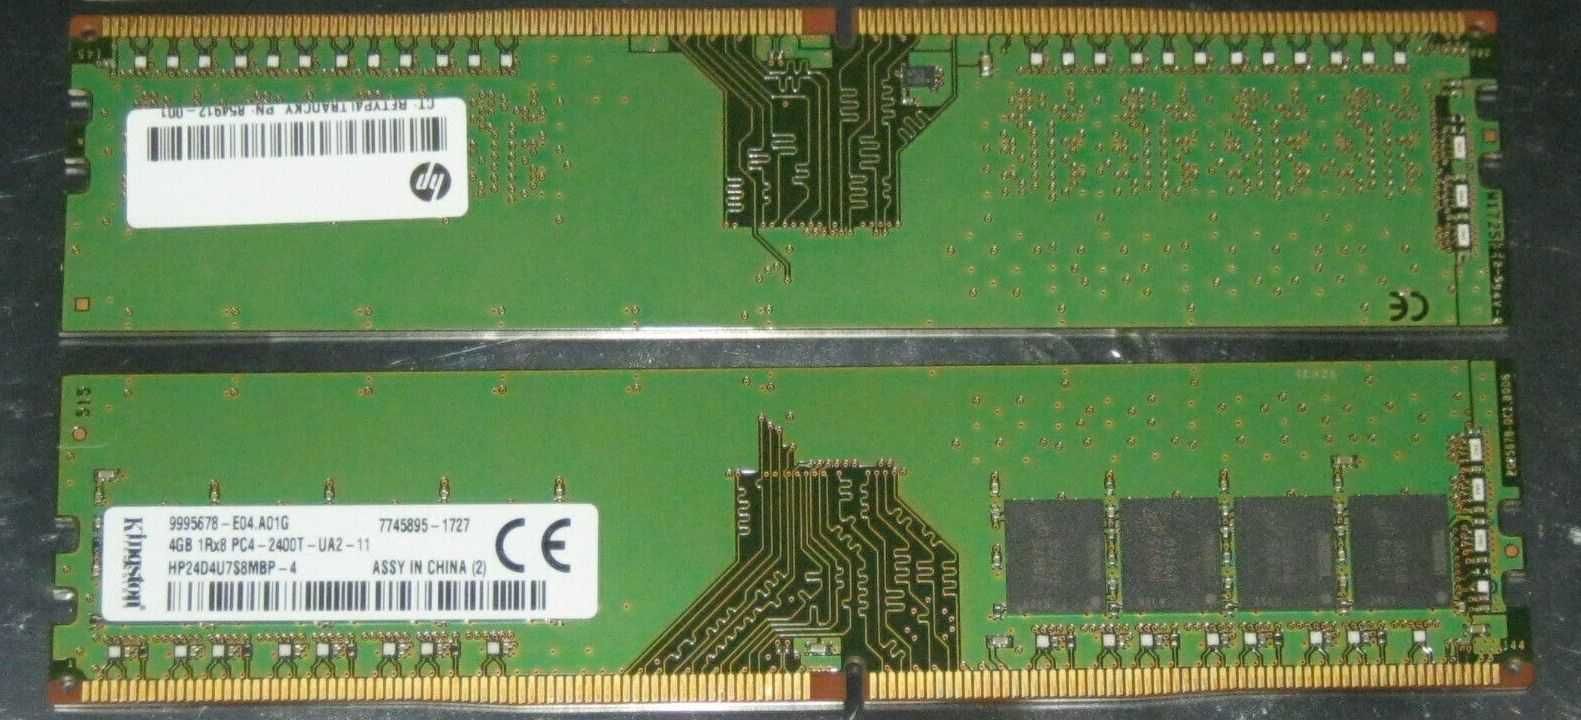 Kit memorie PC 8GB DDR4 2x4GB 2400MHz Kingston HP24D4U7S8MBP-4 Desktop